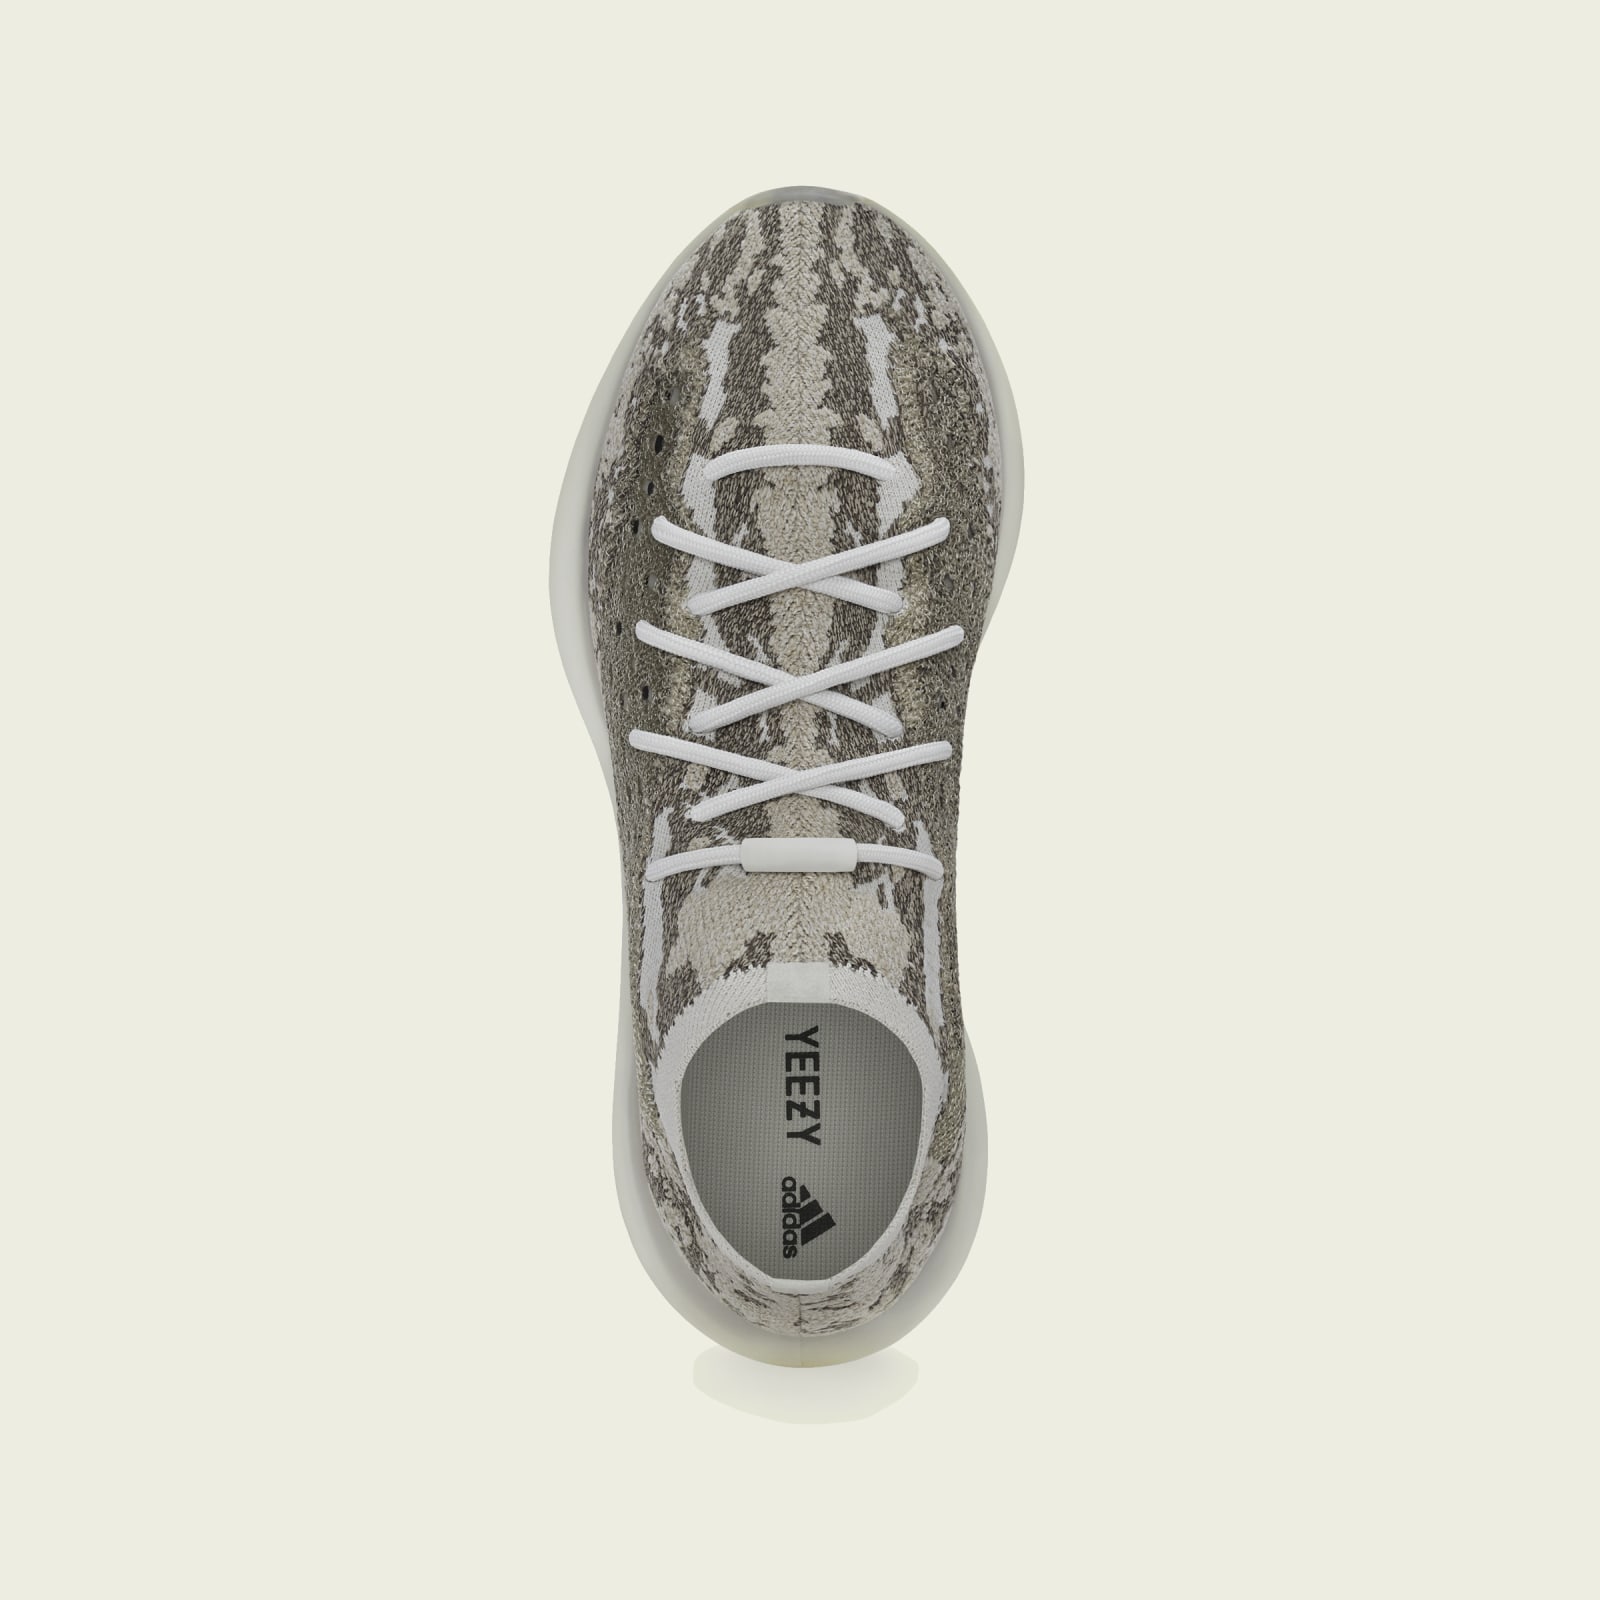 Adidas Yeezy Boost 380
« Pyrite »